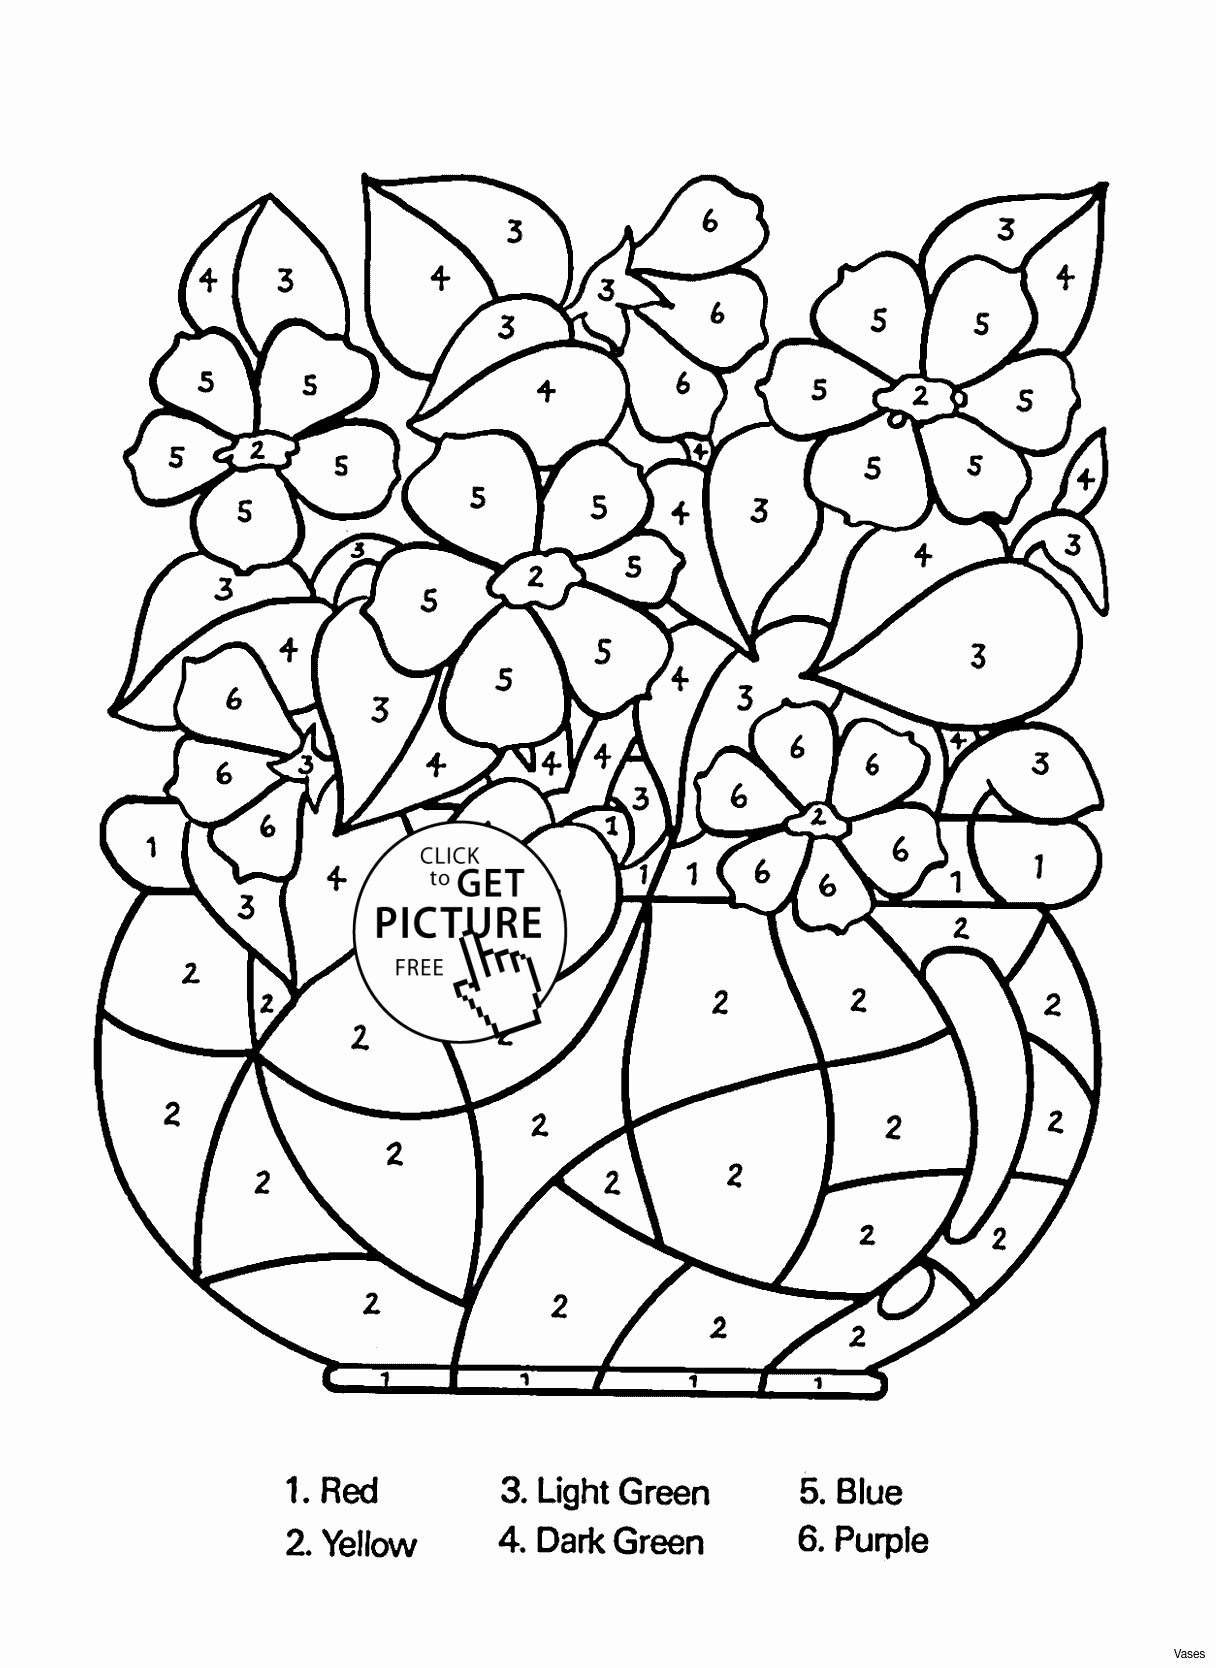 antique black glass vase of black glass vases images 1930 s vintage deco black amethyst glass intended for black glass vases photos vases flower vase coloring page pages flowers in a top i 0d